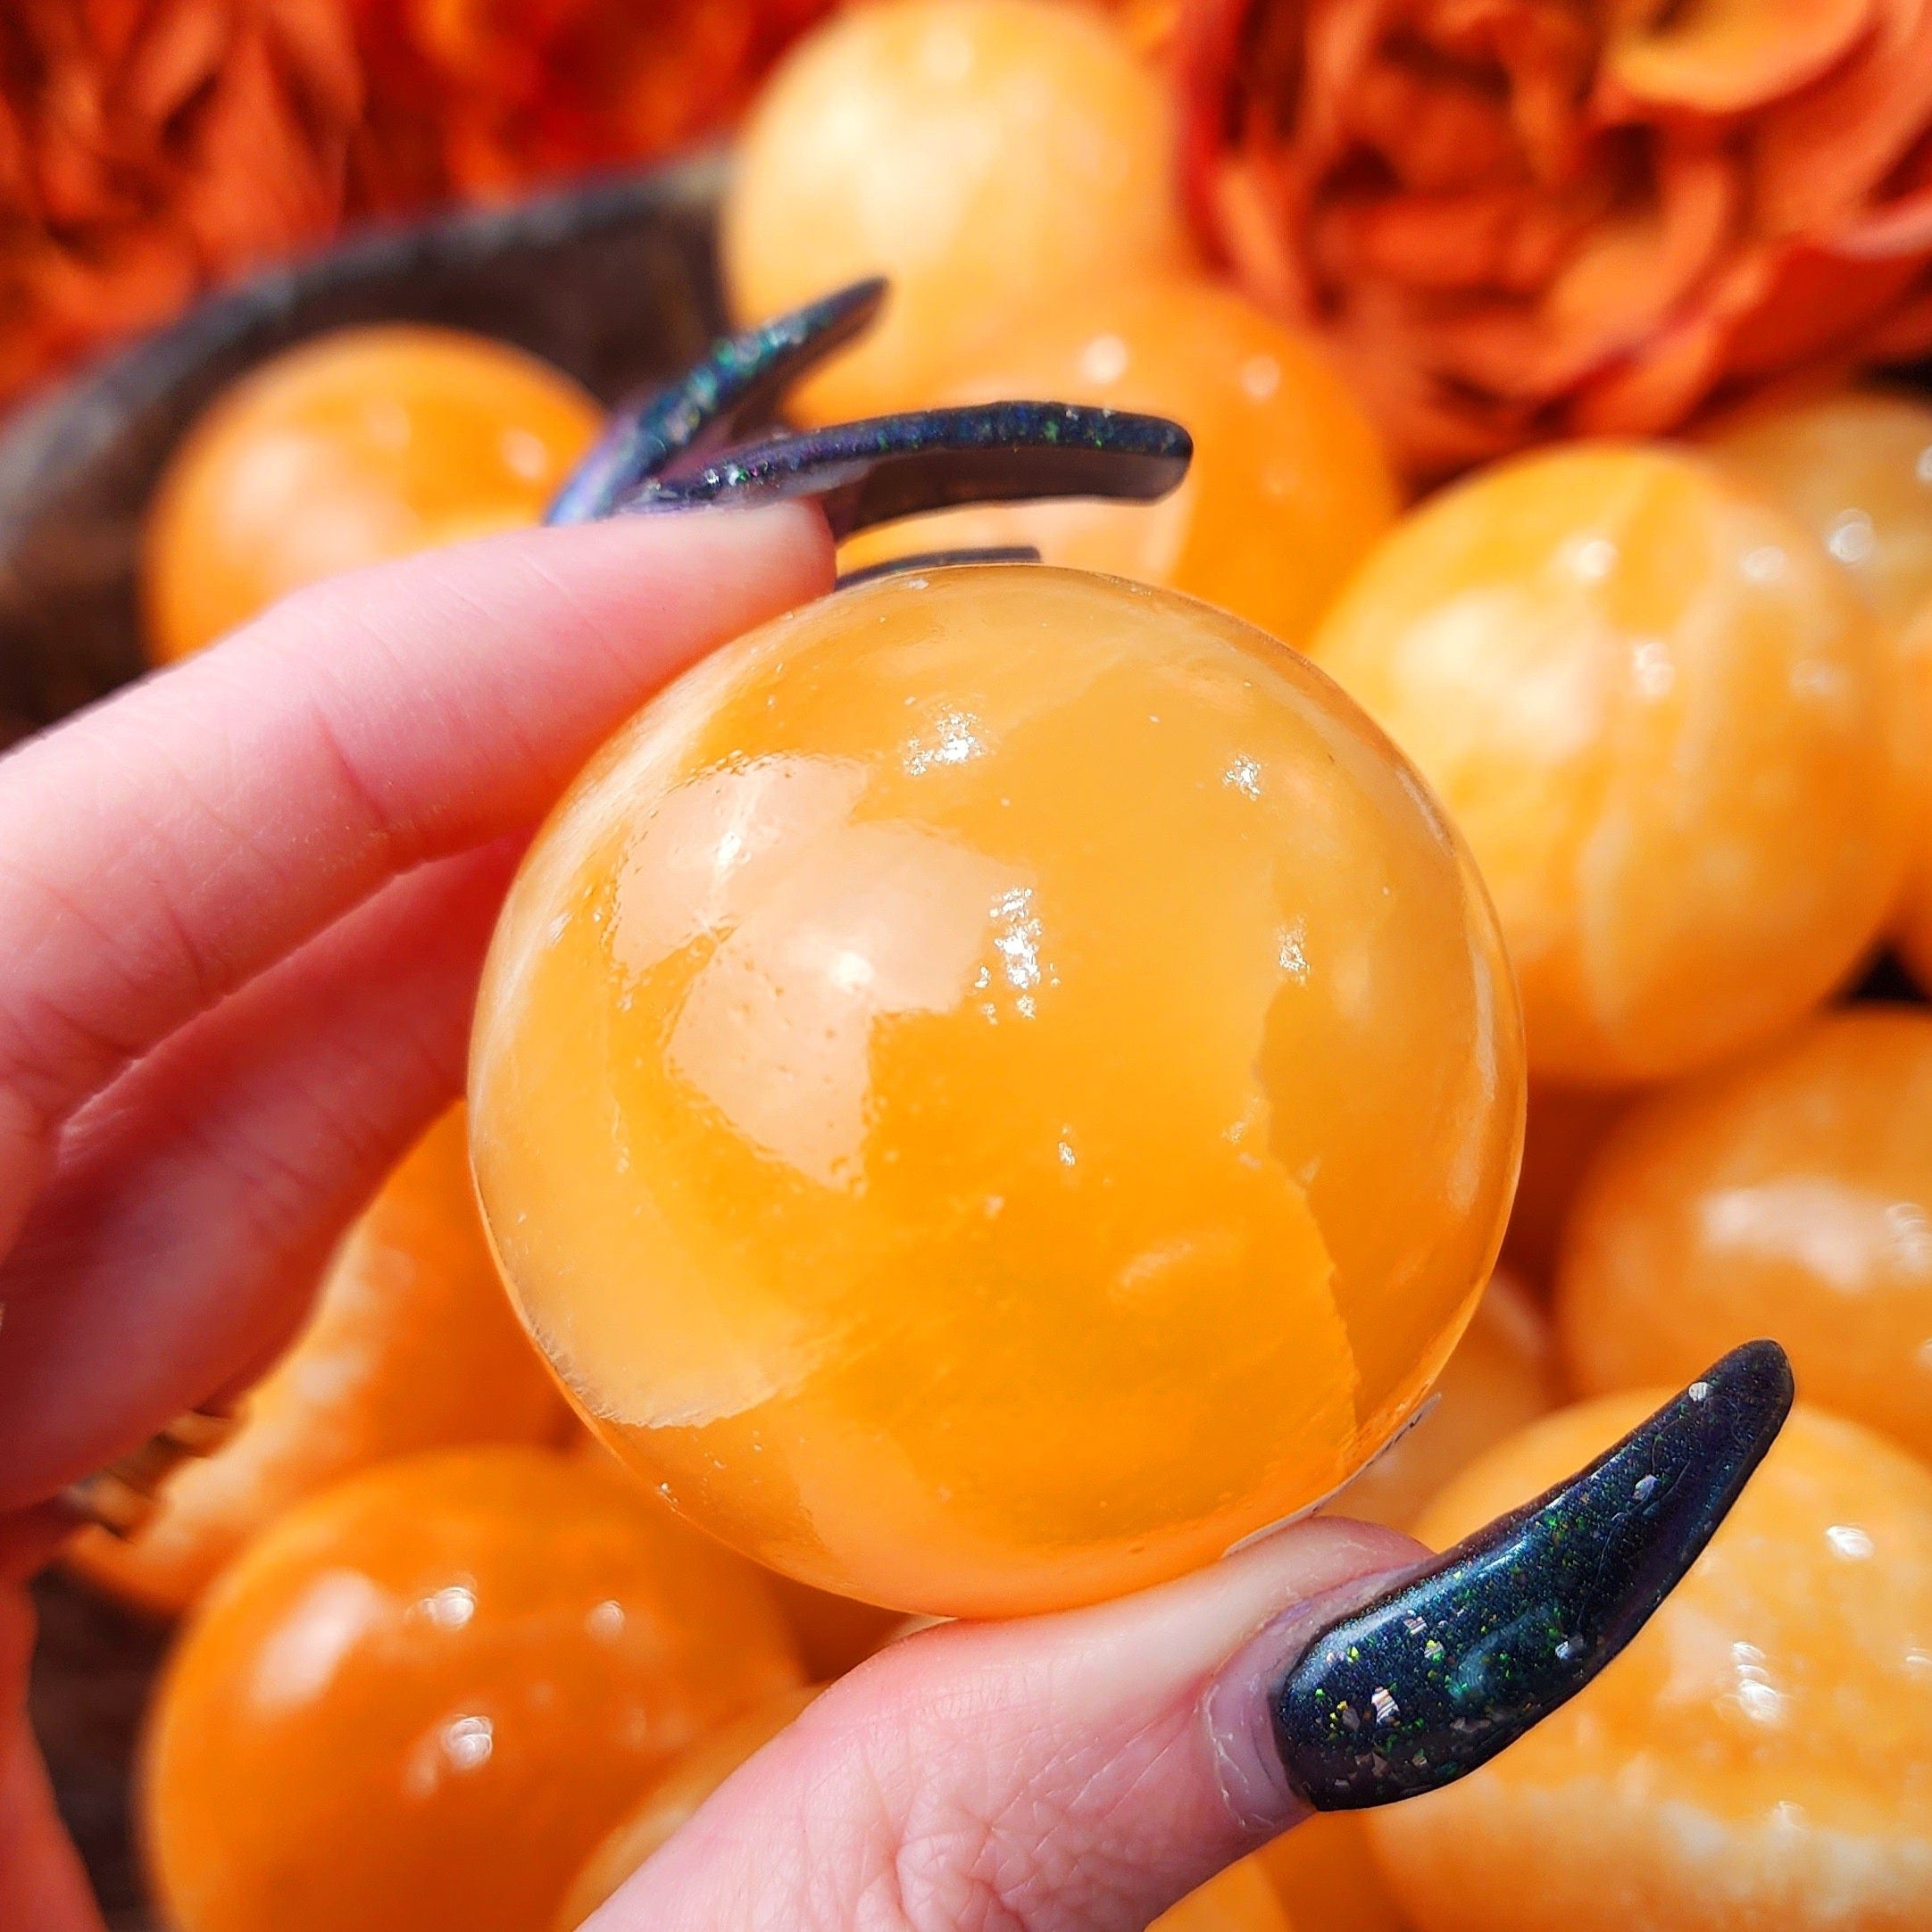 Orange Calcite Sphere for Creativity, Joy and Vitality